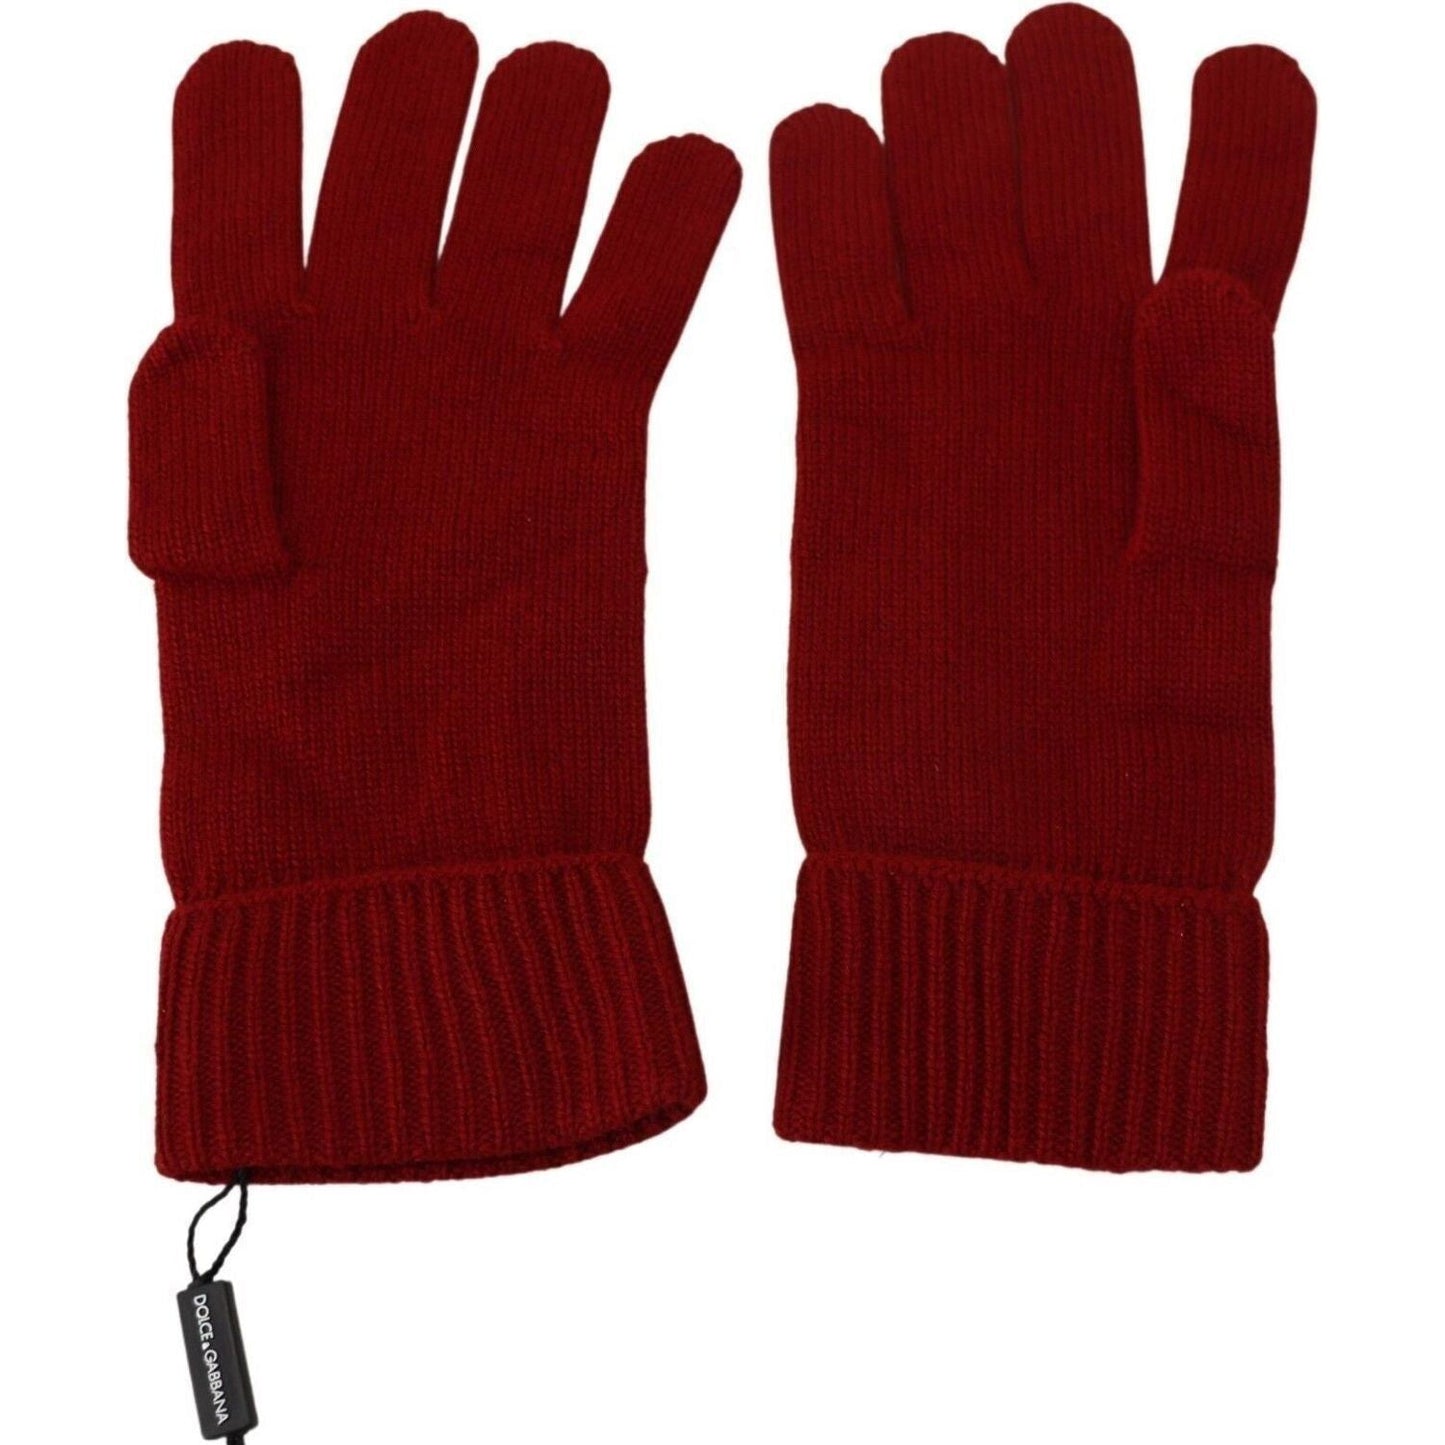 Dolce & Gabbana Elegant Red Cashmere Winter Gloves red-100-cashmere-knit-hands-mitten-mens-gloves s-l1600-44-2-a8ad3152-de6.jpg